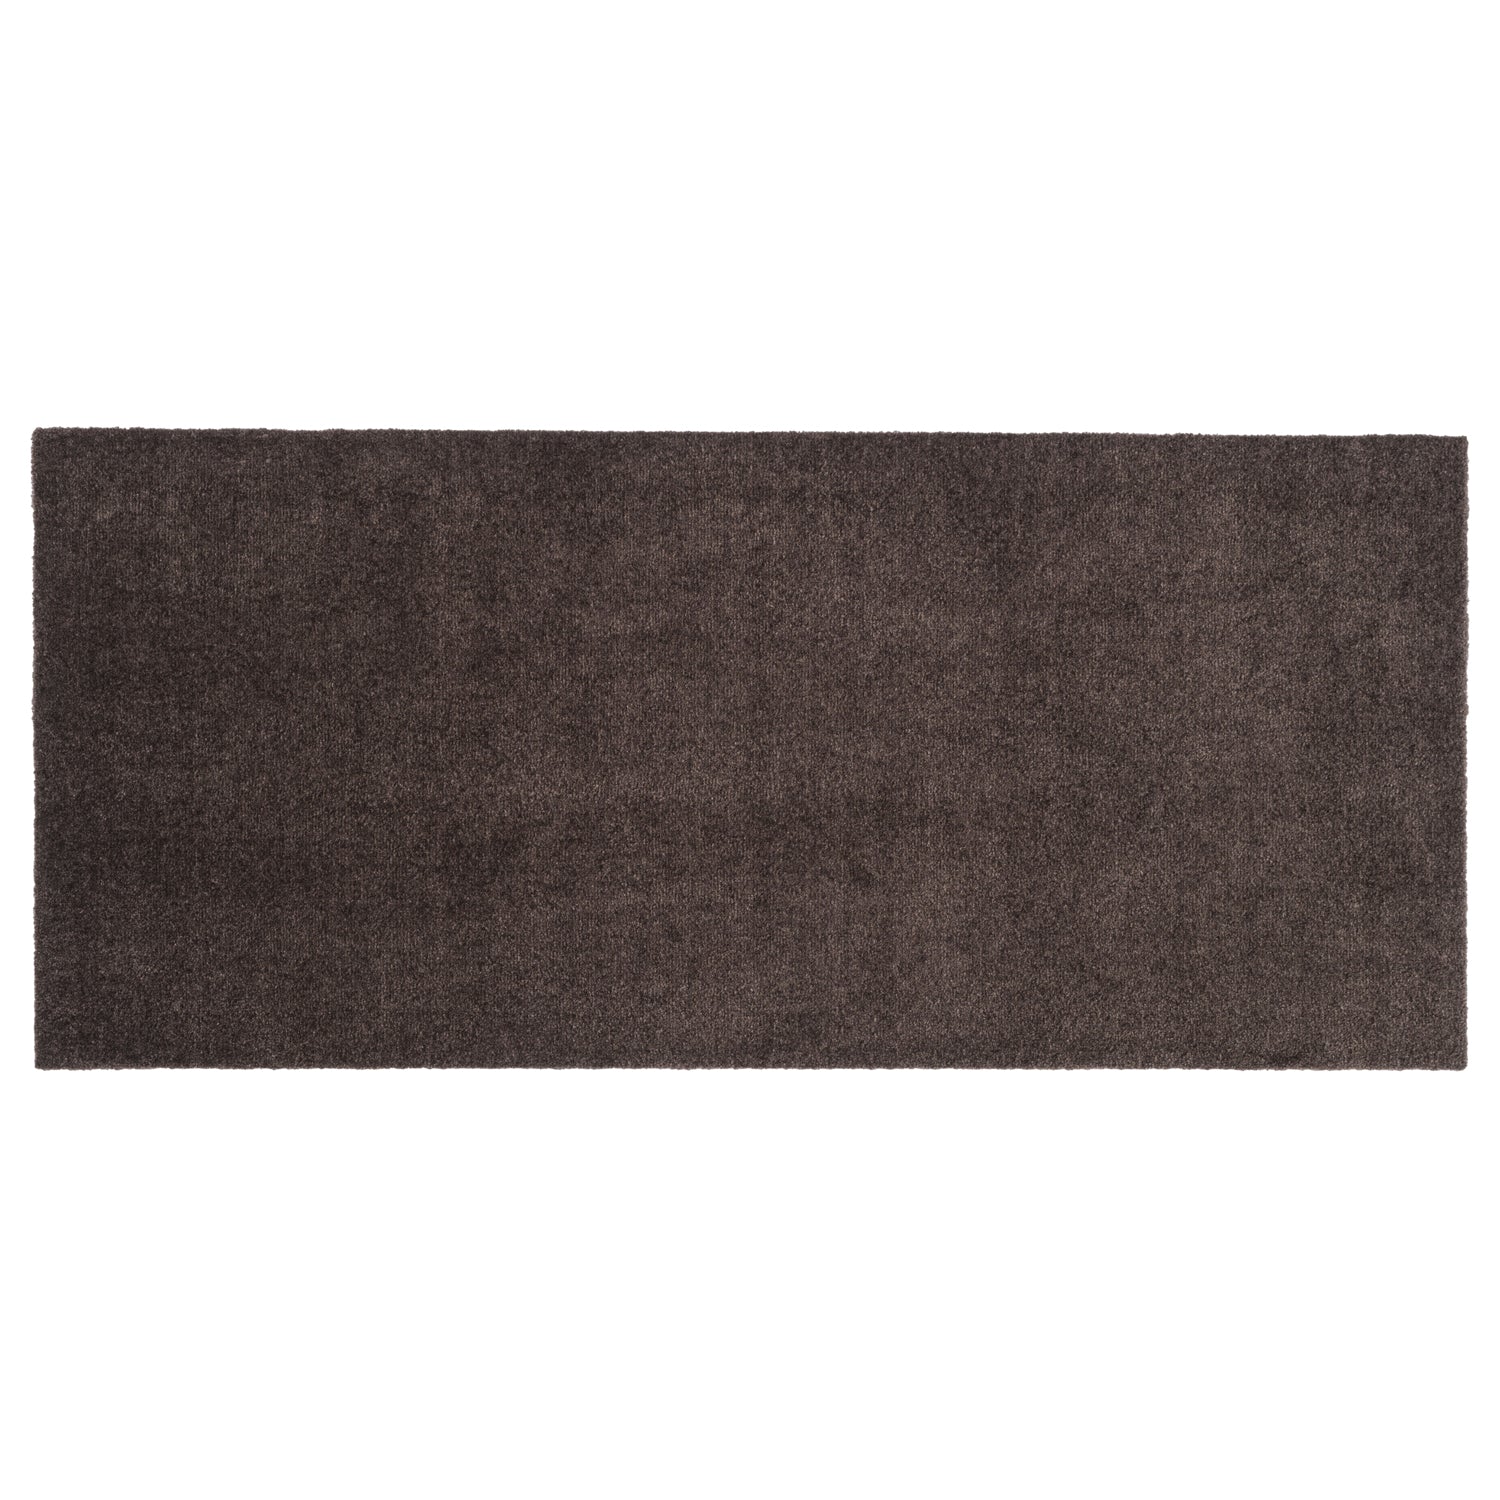 Blanket/had 67 x 150 cm - Uni Color/Brown